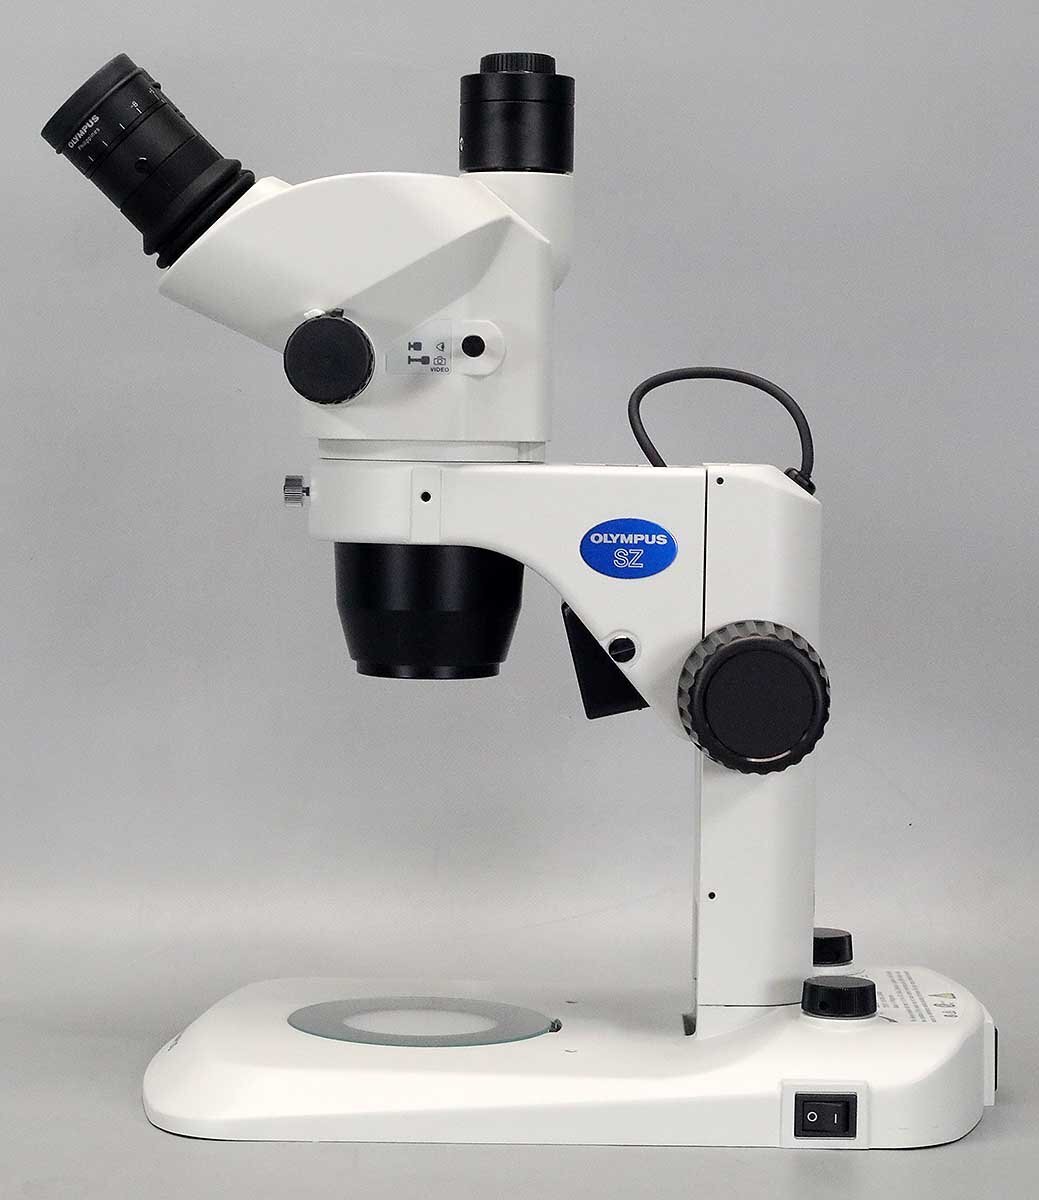 OLYMPUS コンパクト実体顕微鏡 SZ61TR LED照明架台SZ2-ILST 付き【中古】□_画像2